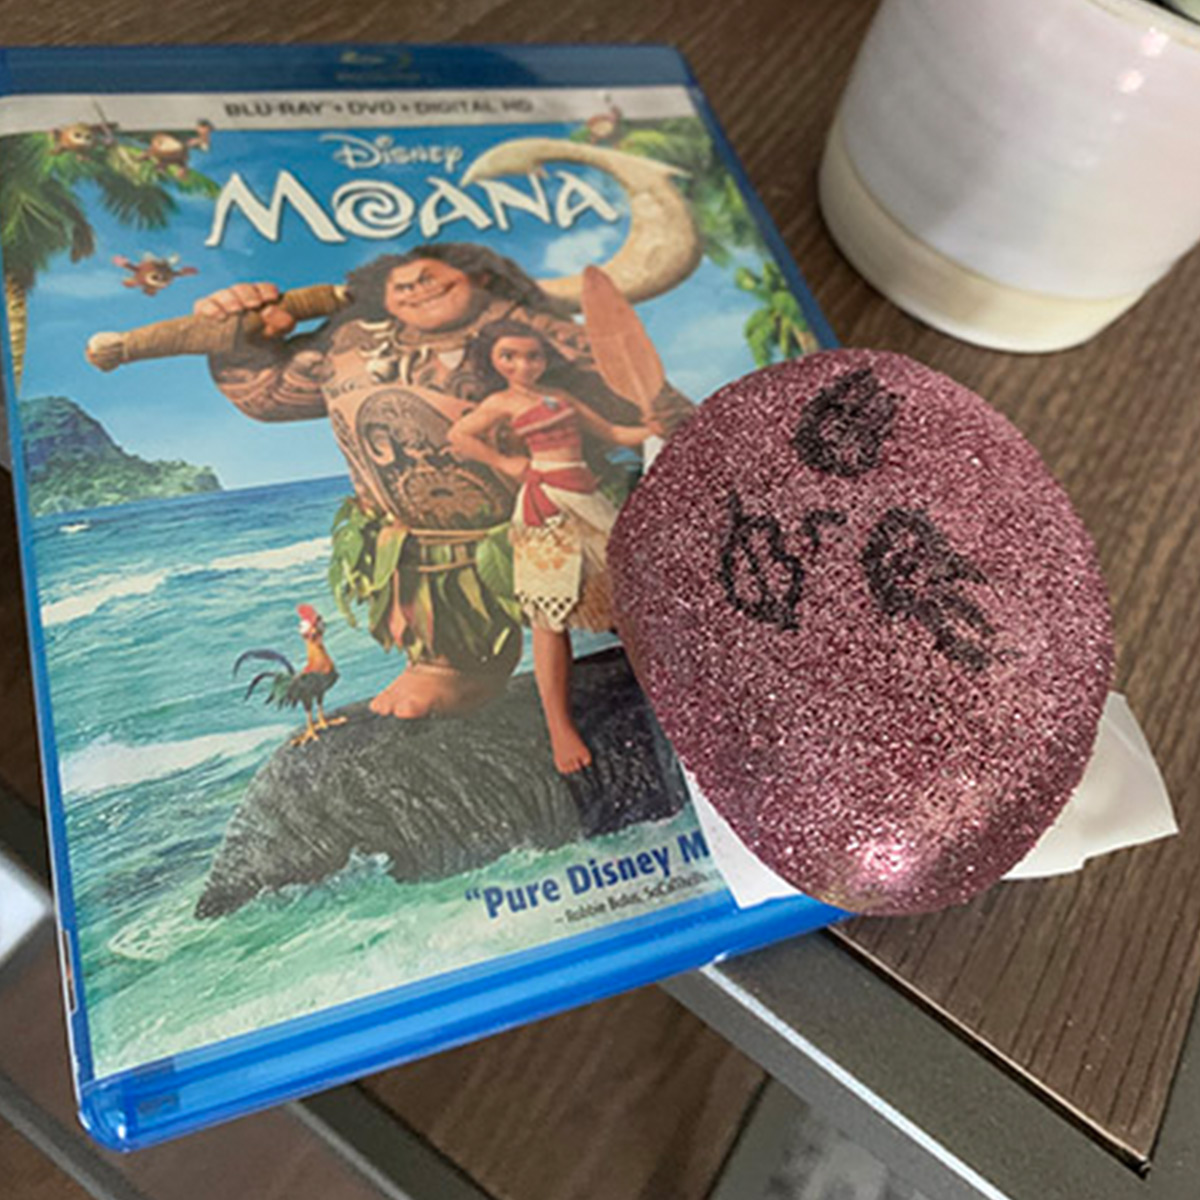 Skip the Pet Rock with Moana DVD